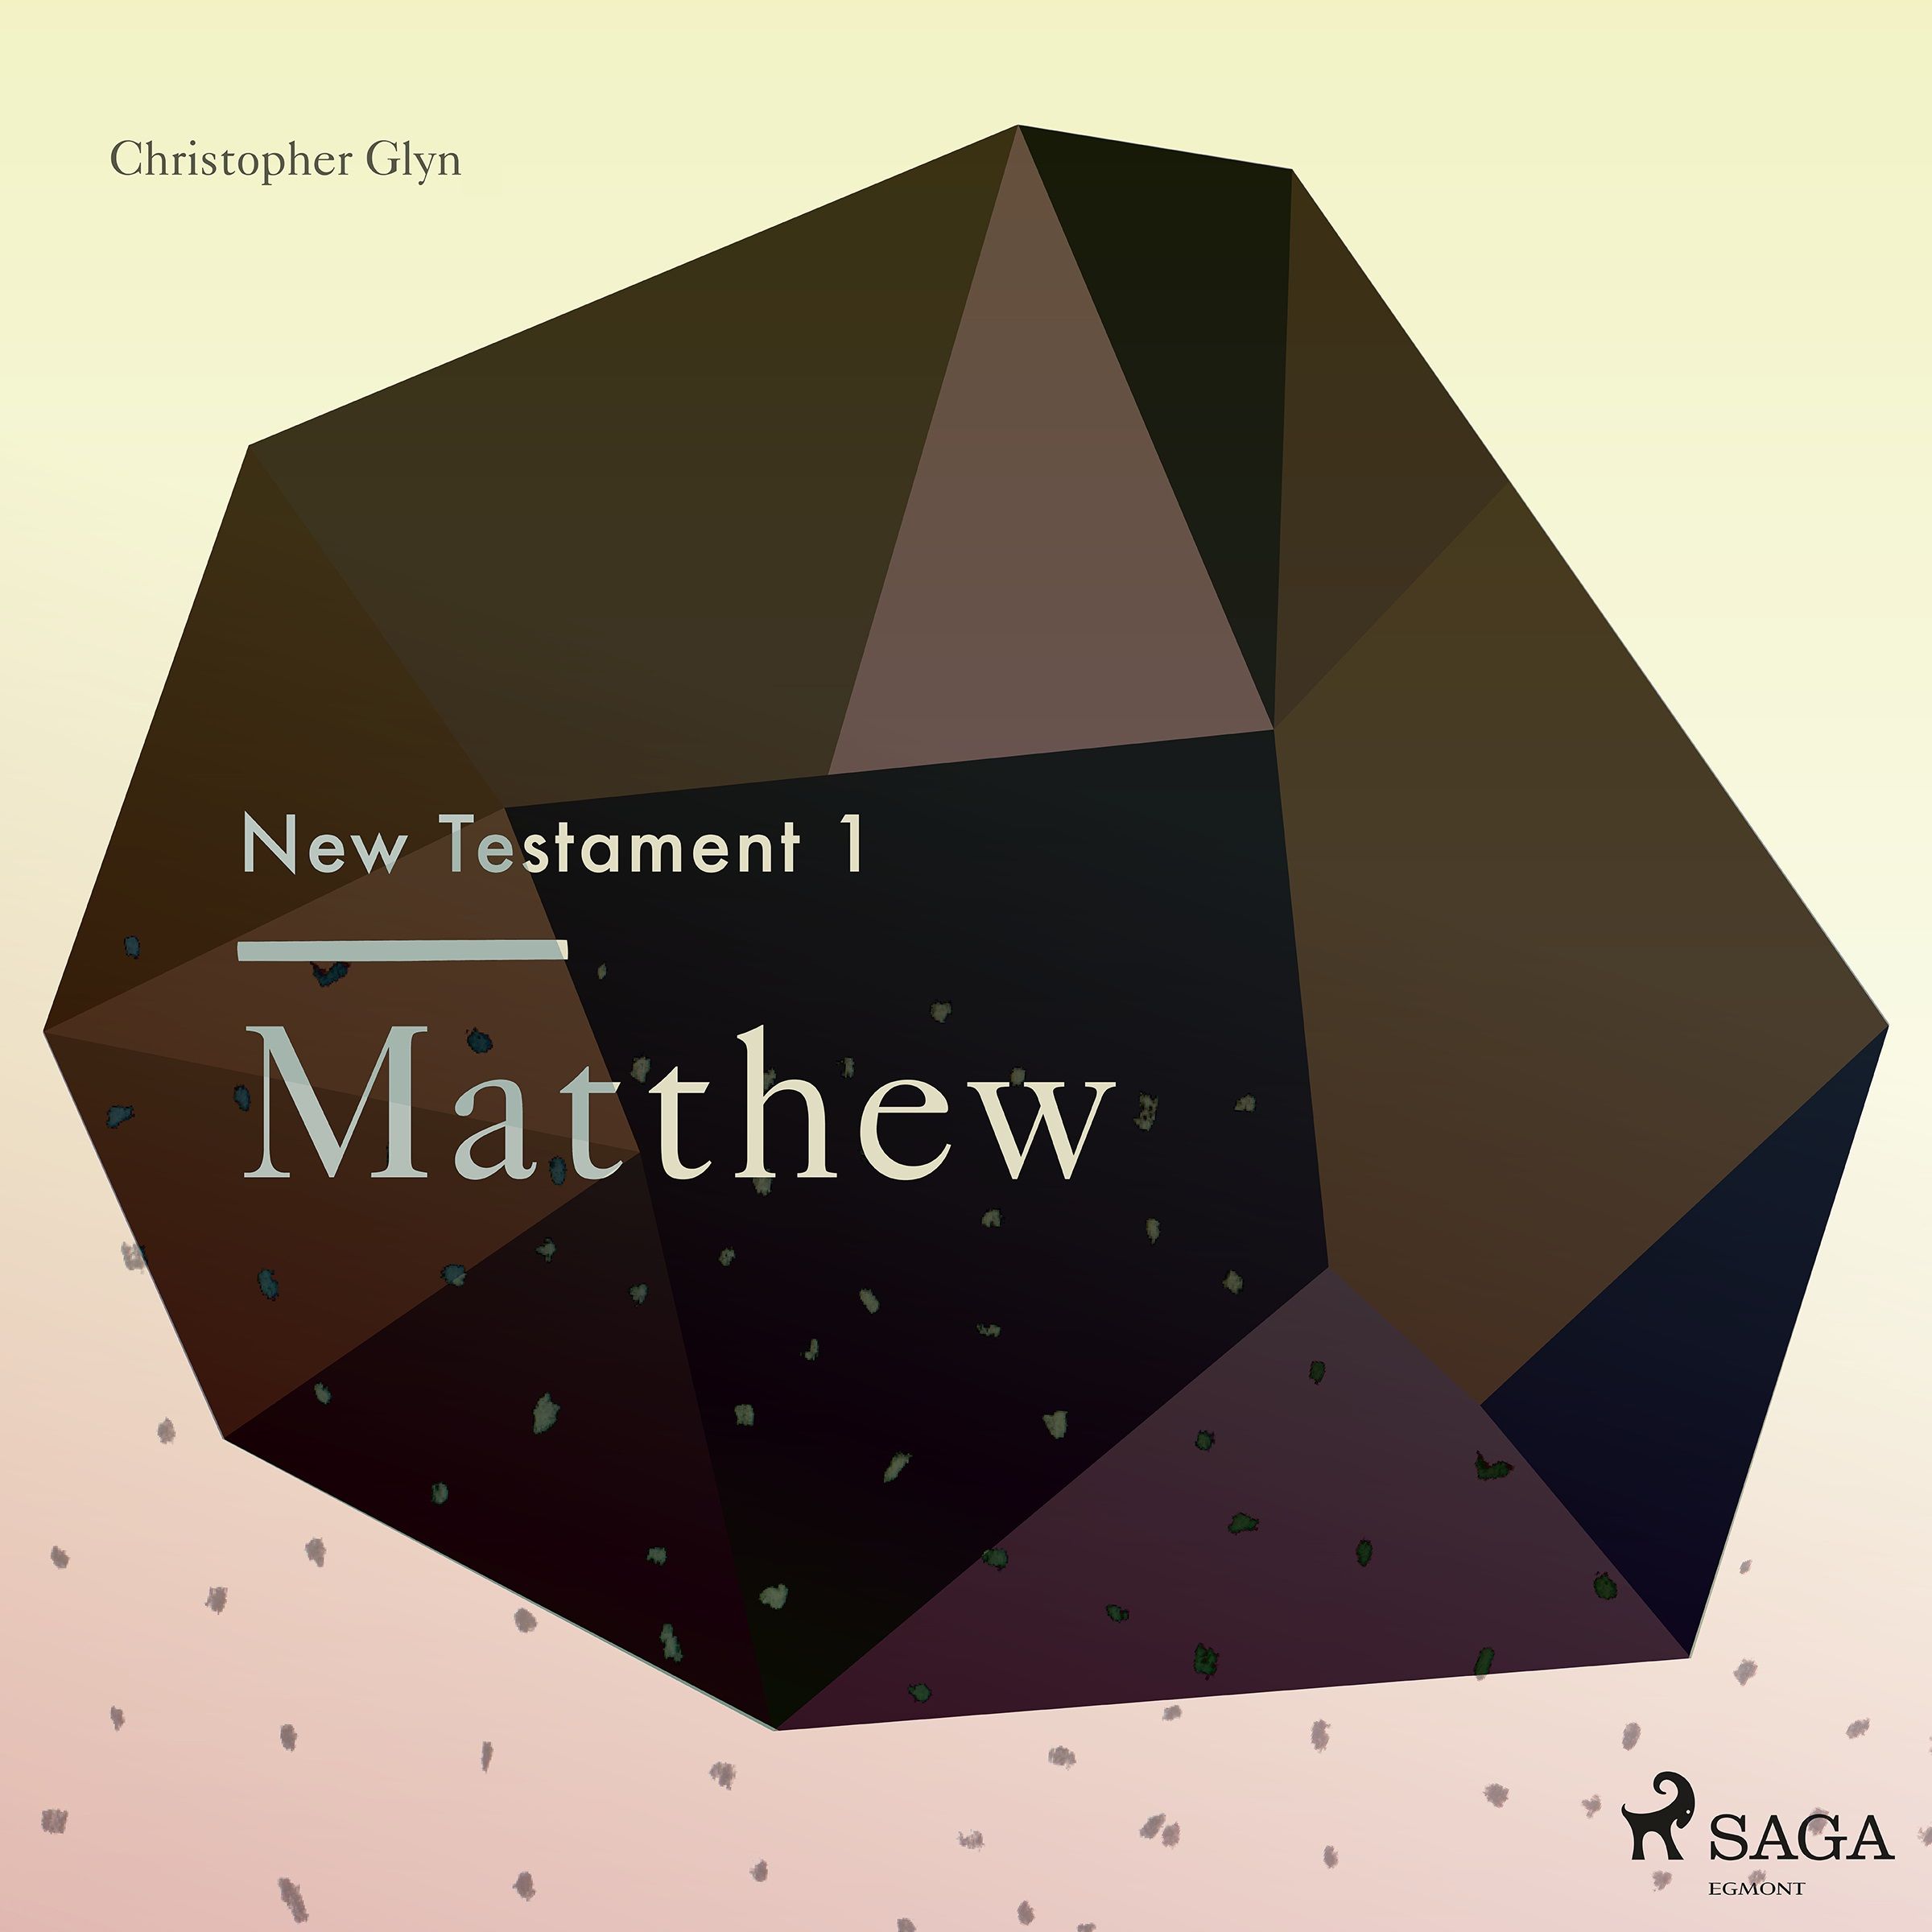 The New Testament 1 - Matthew, lydbog af Christopher Glyn